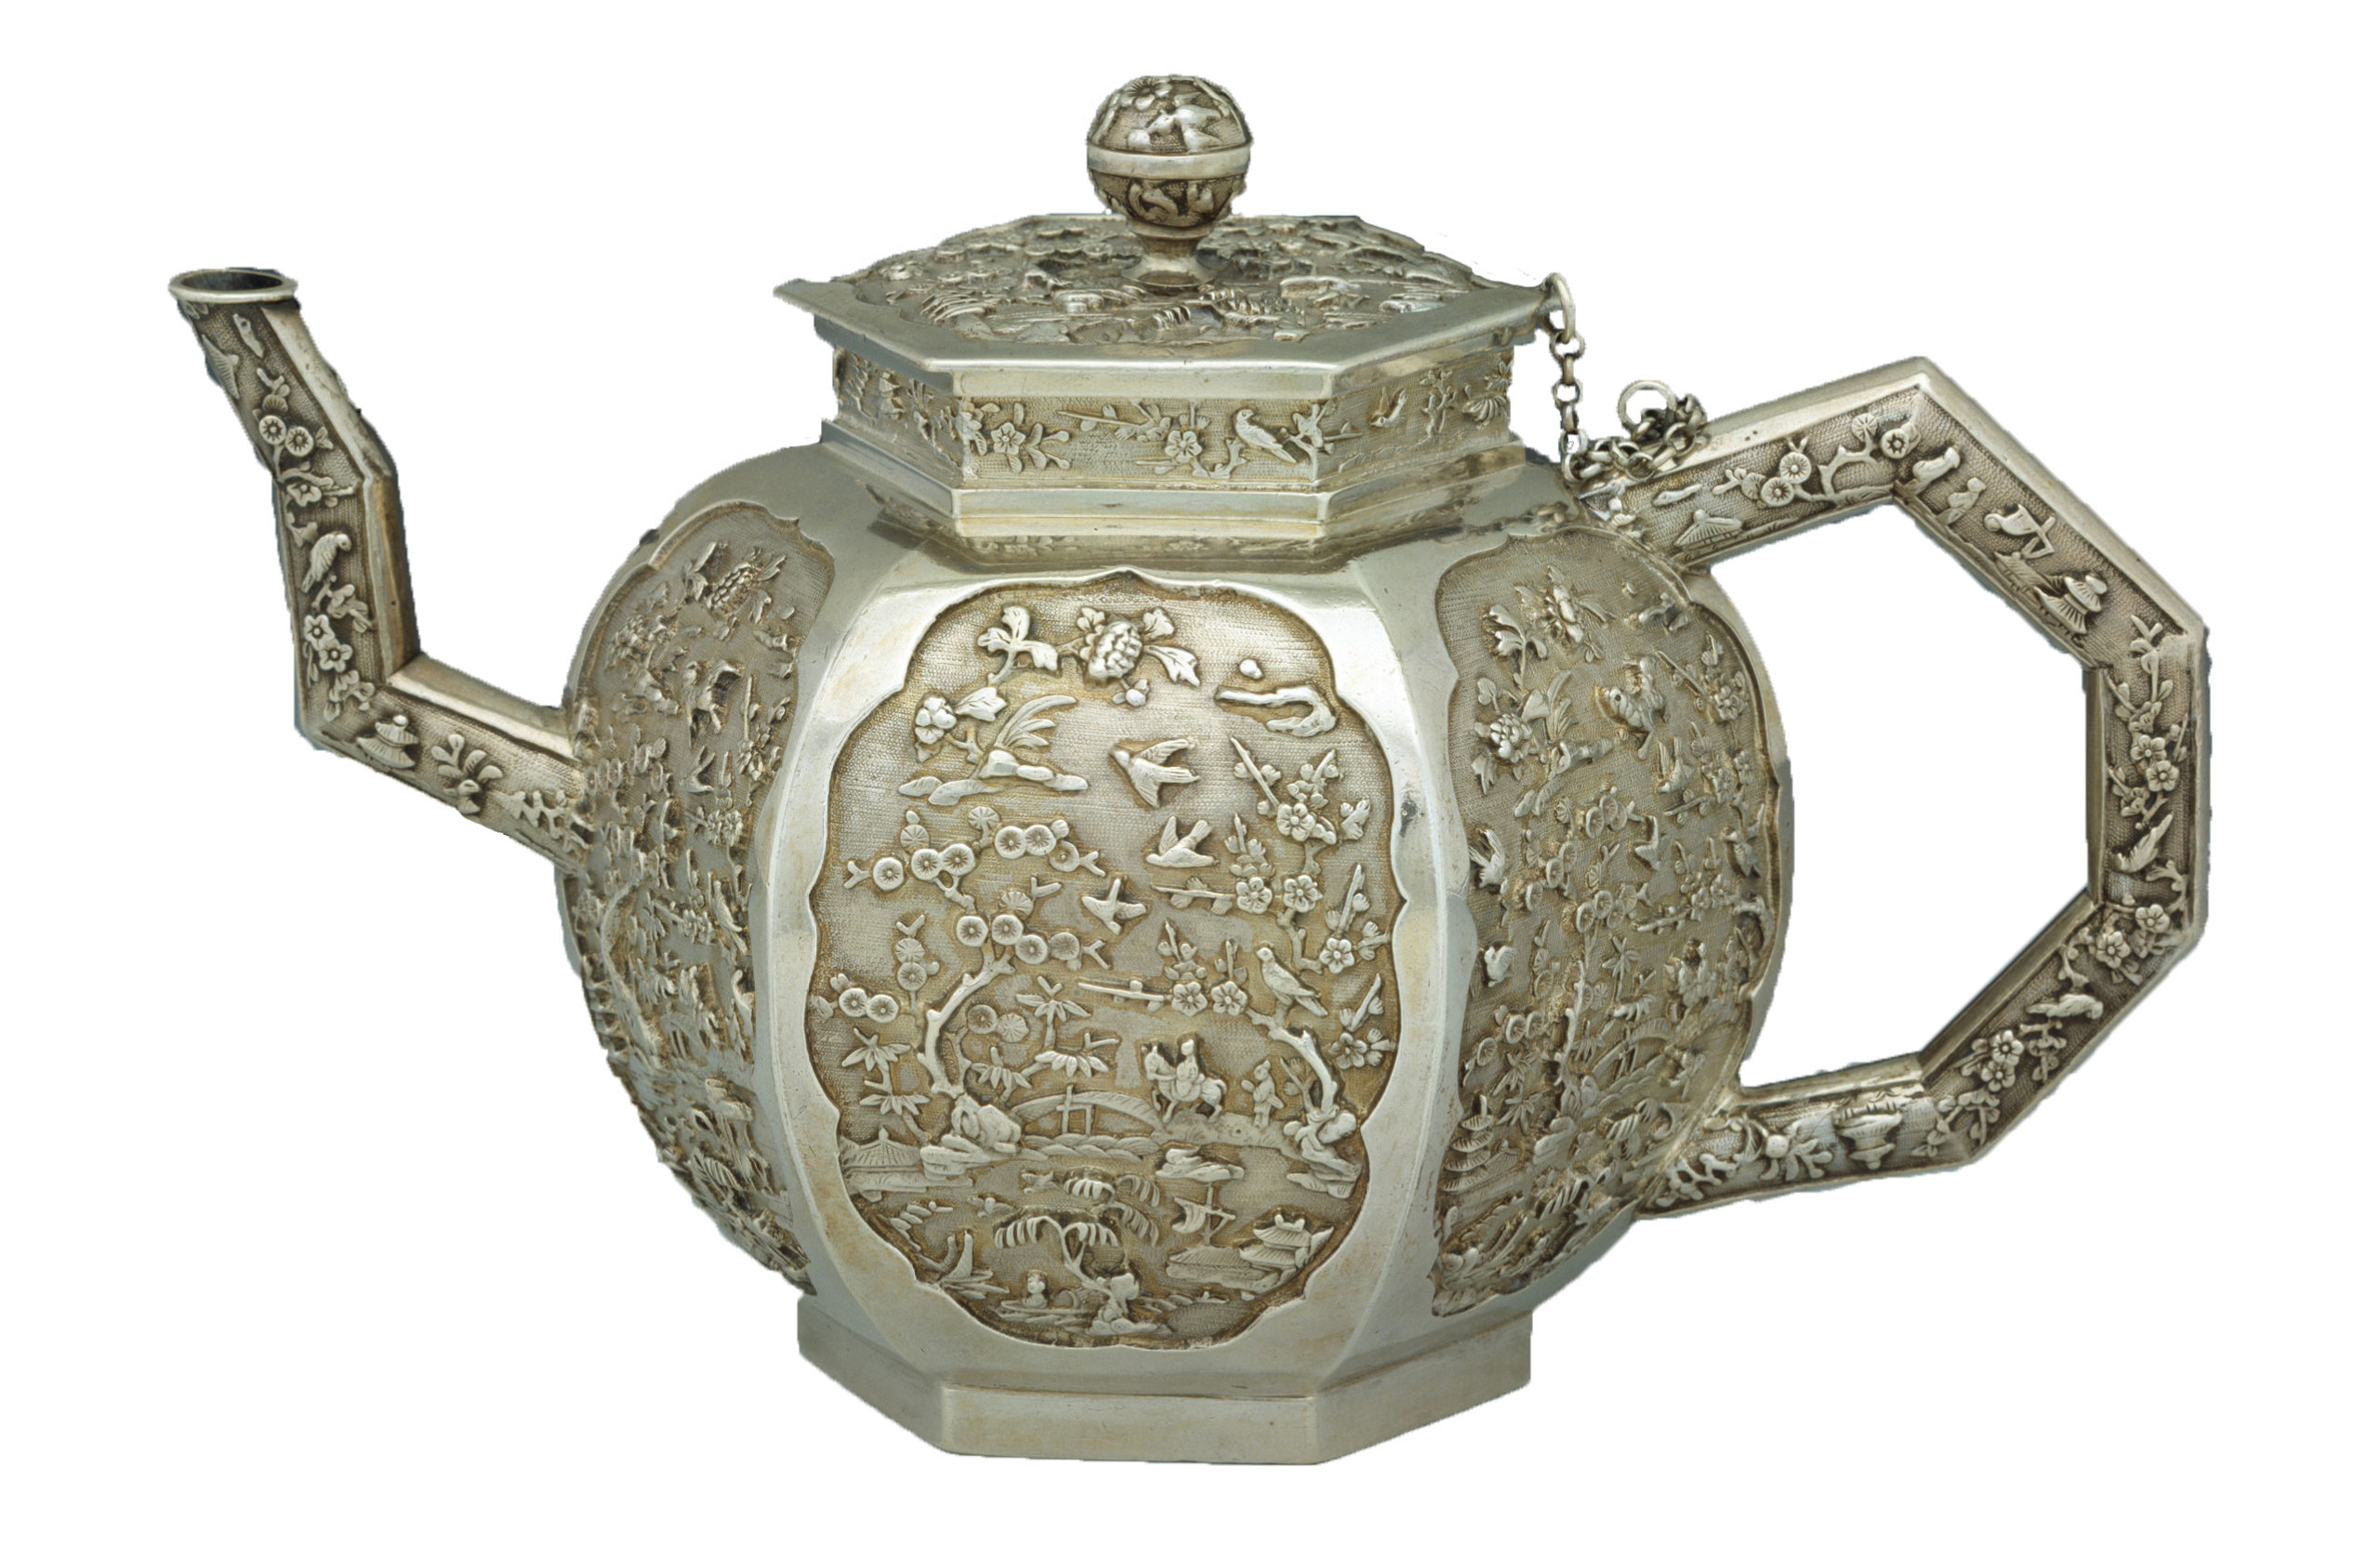 Teapot, 1680, China, silver, 13.97 x 21.59 x 11.43 cm (Peabody Essex Museum)